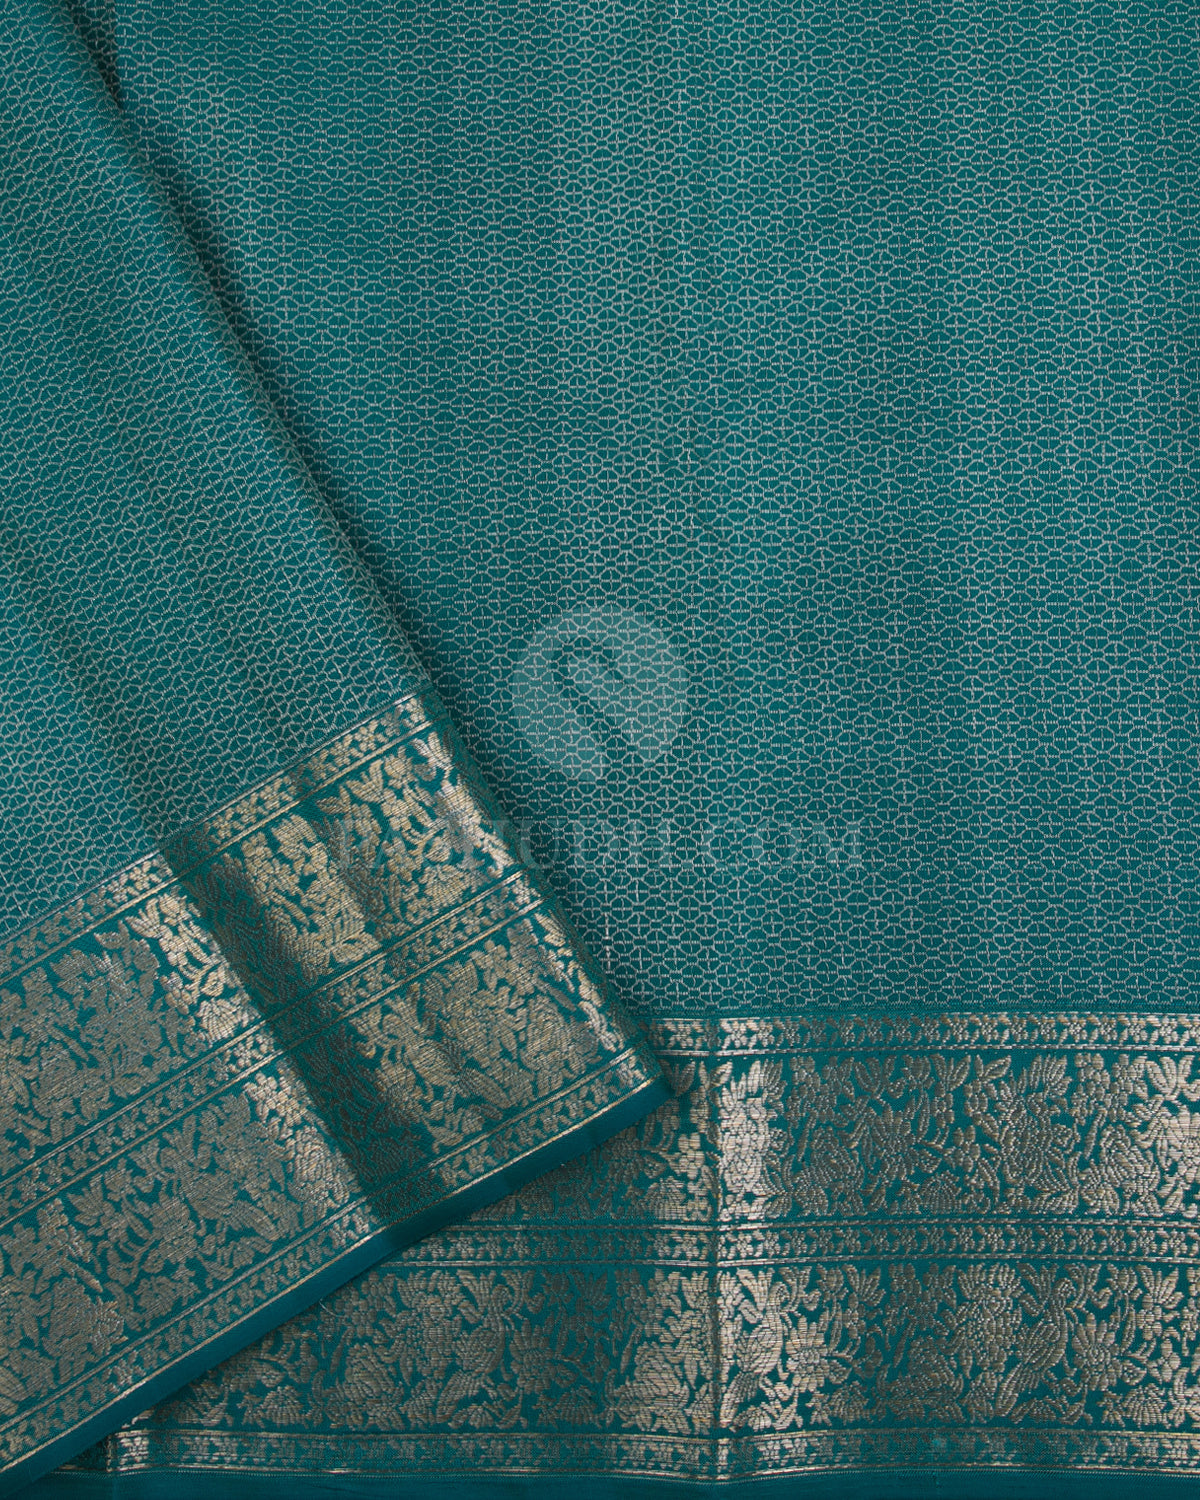 Turquoise Blue and Teal Kanjivaram Silk Saree - DT255(A) - View 2